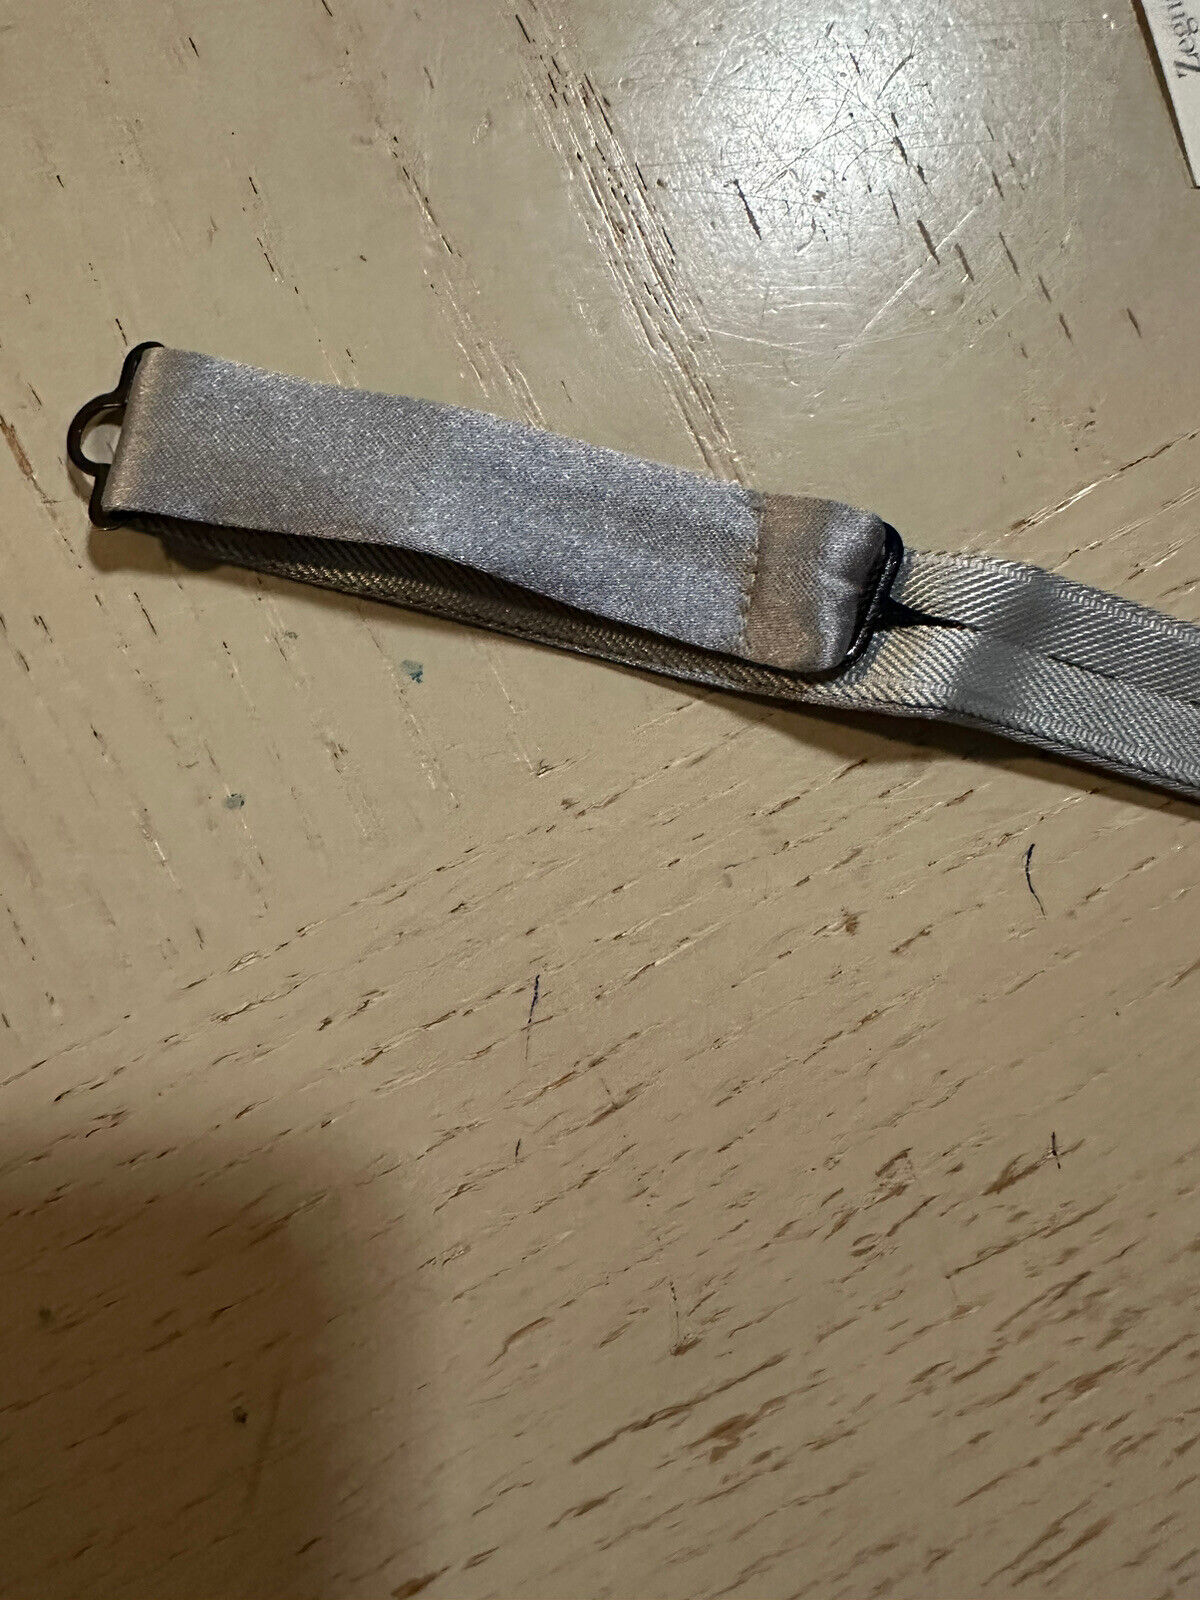 New Ermenegildo Zegna Silk Bow Tie Gray SLD Made in Italy